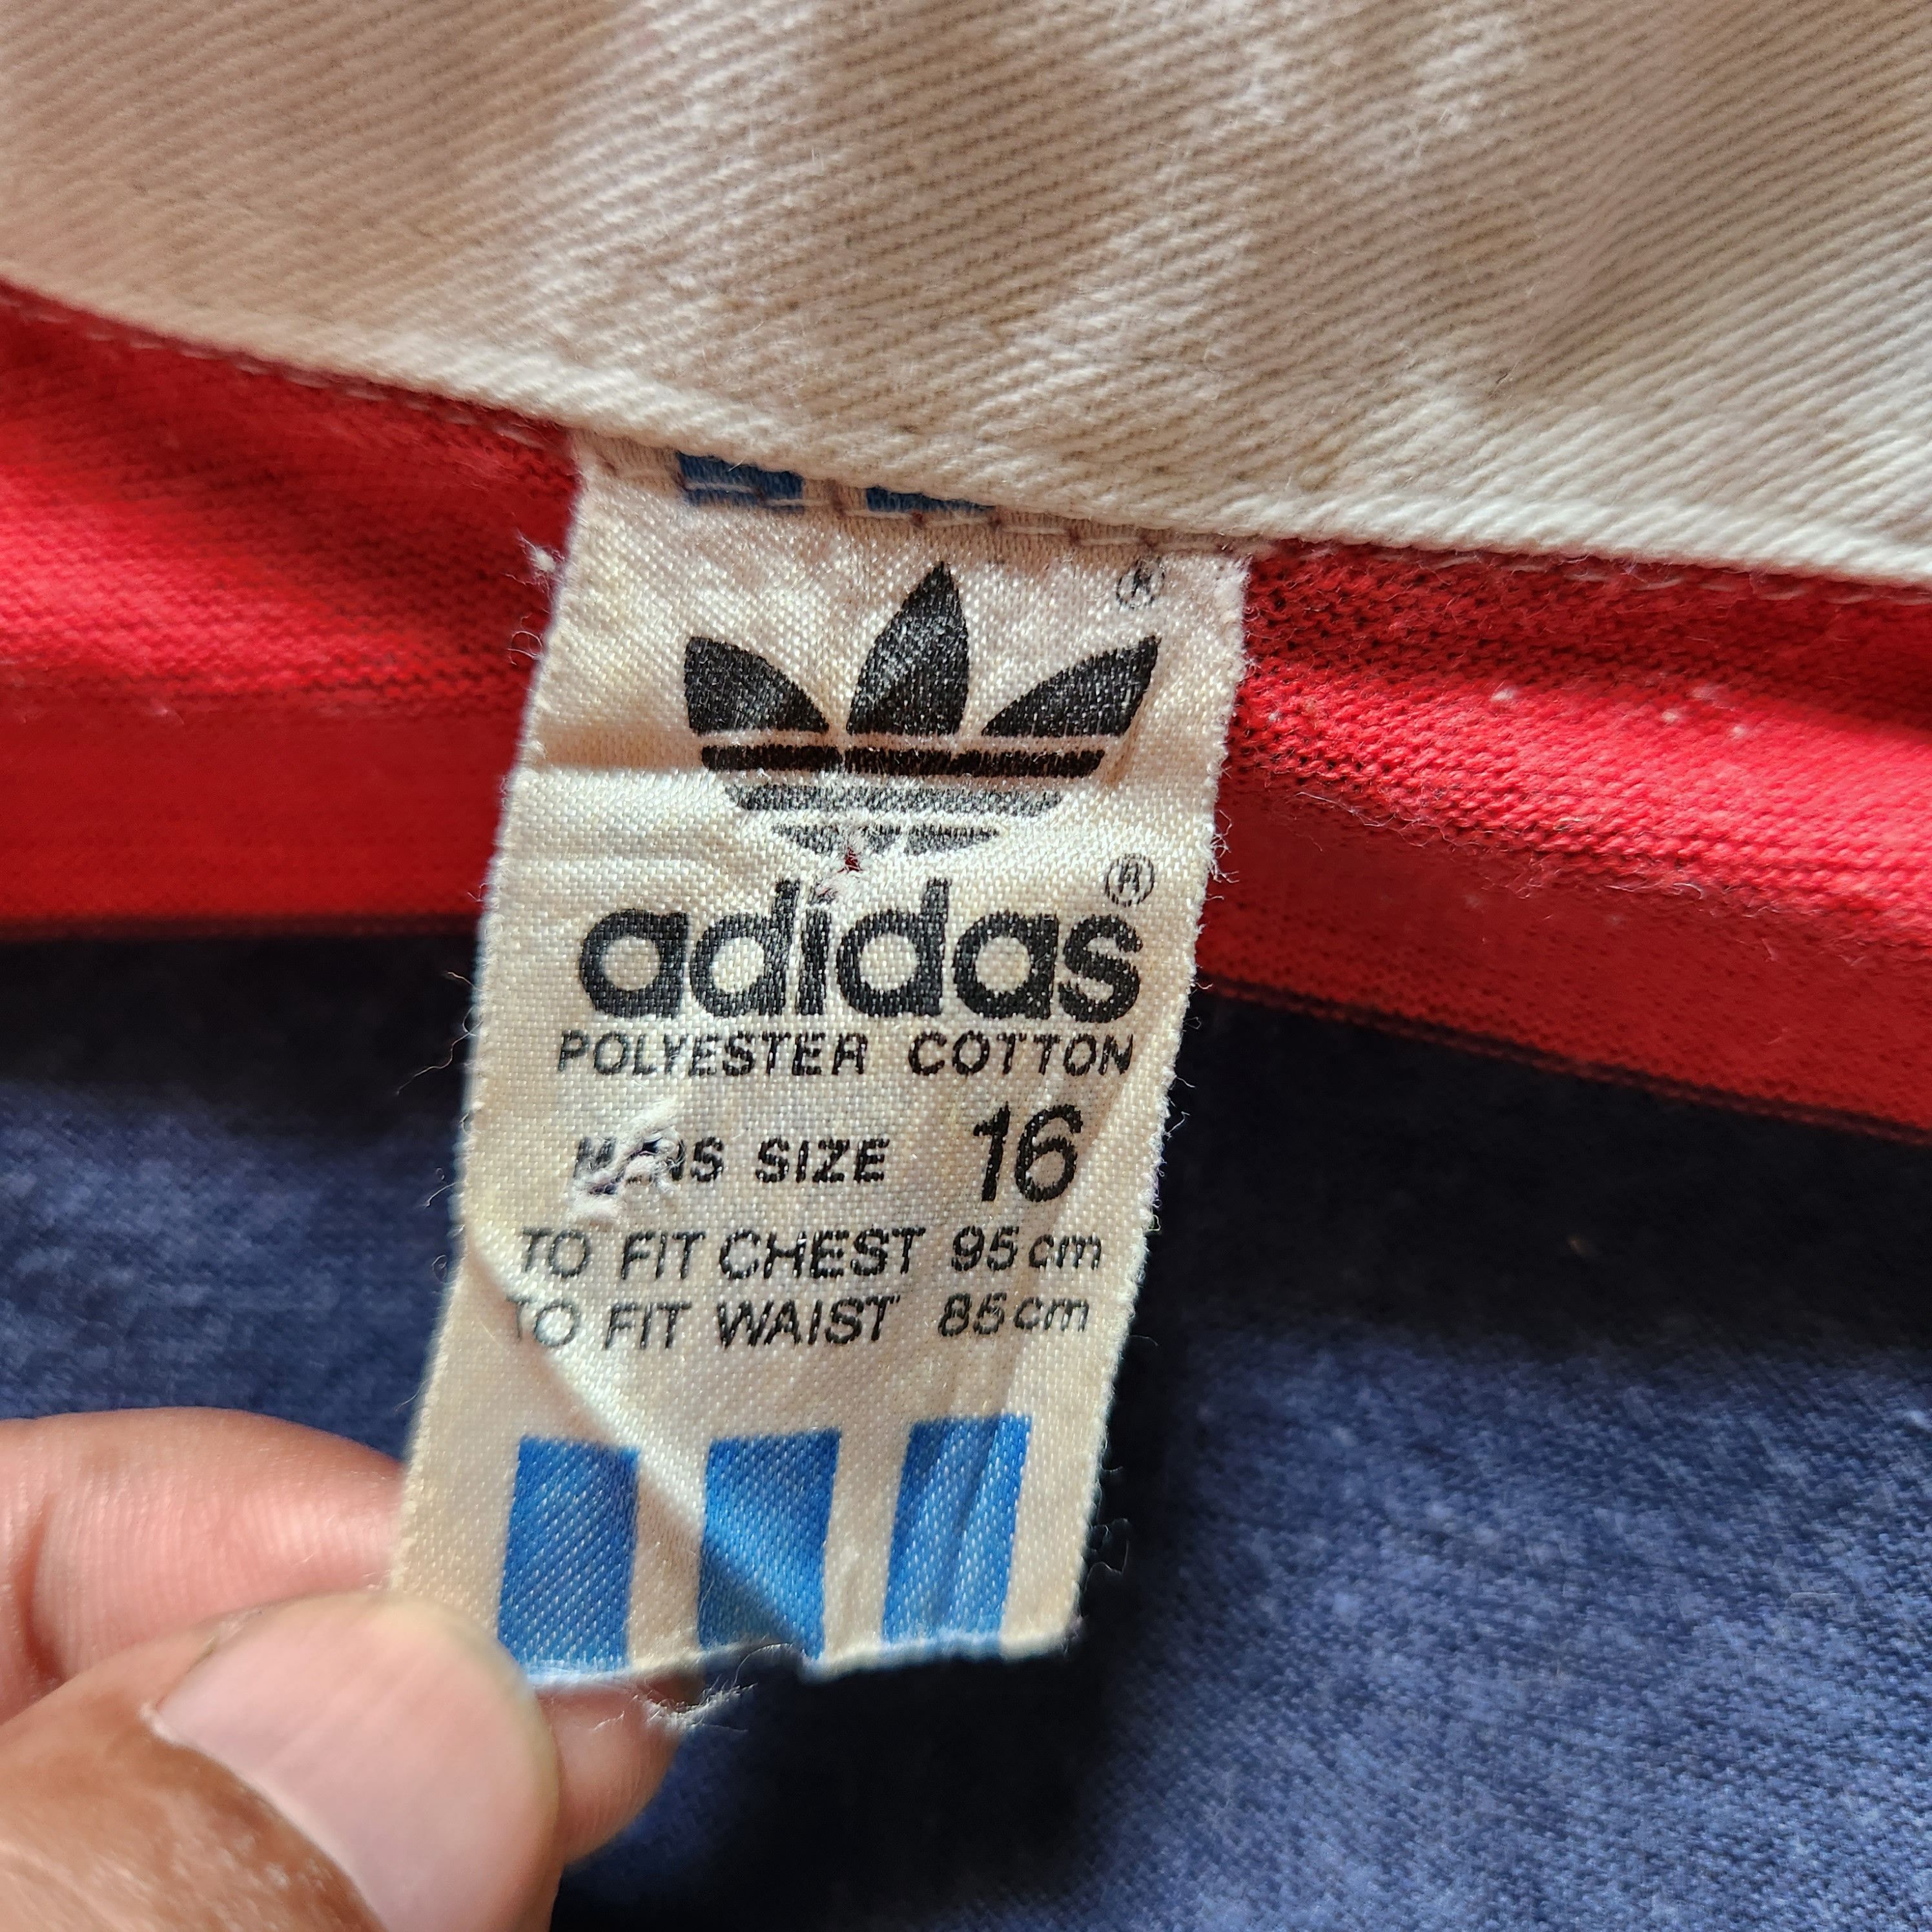 Vintage 1980s Adidas Trefoil Polo Shirt Polyester Cotton - 9